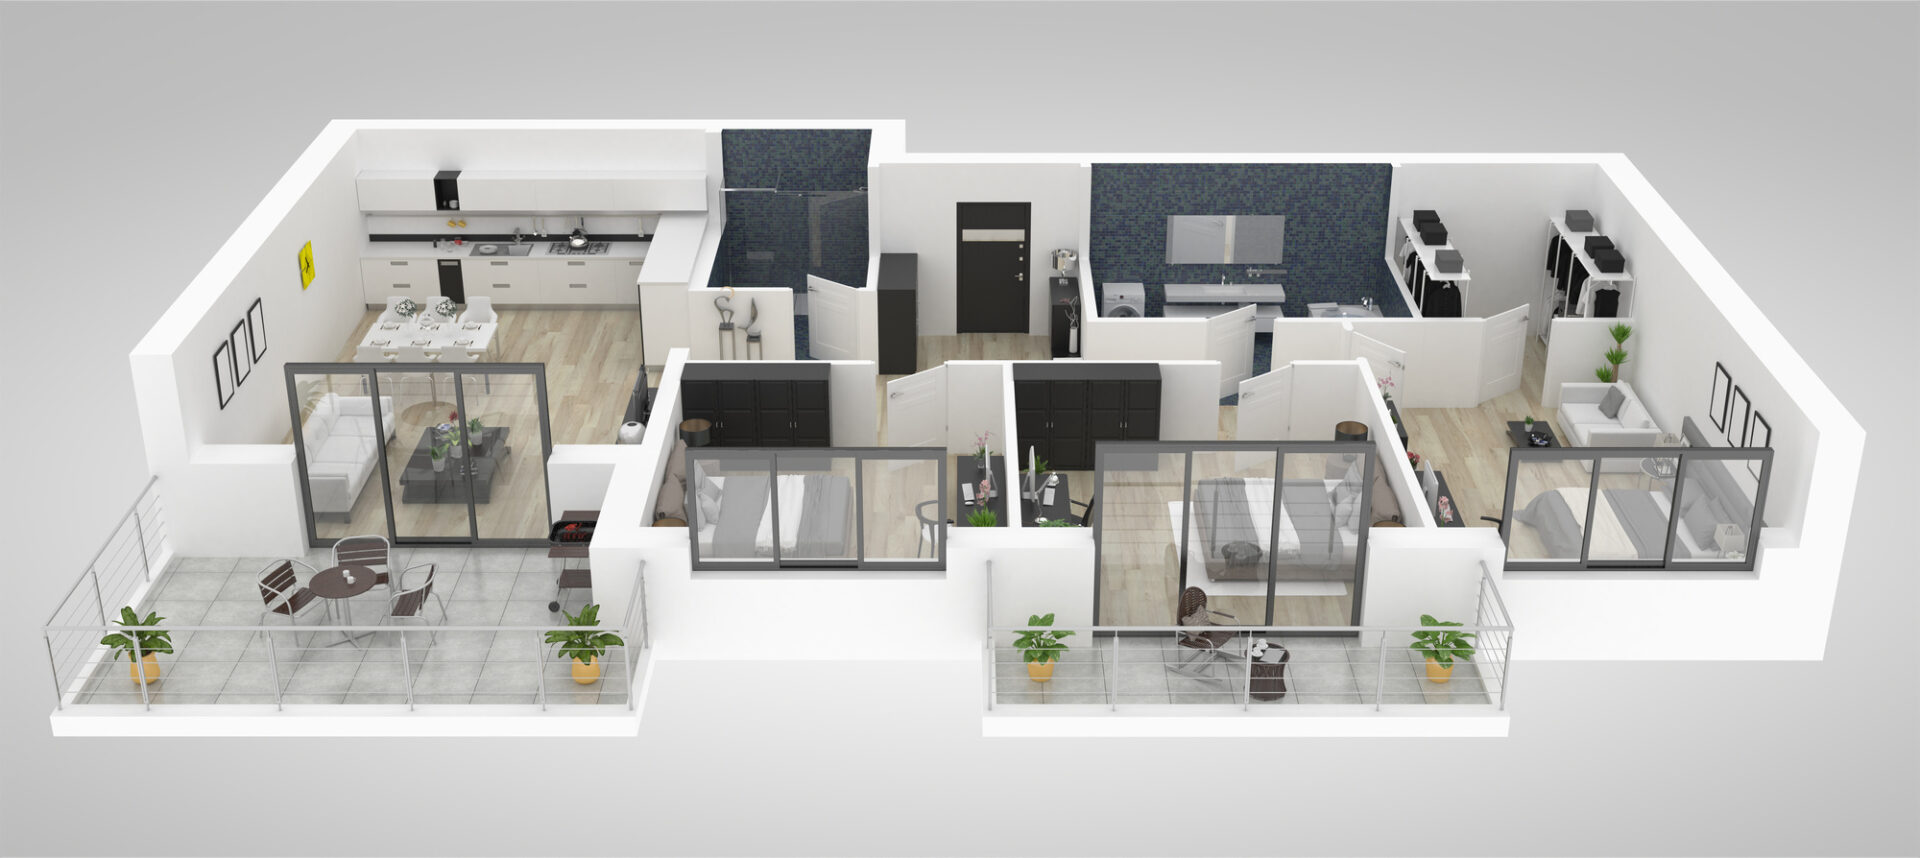 Floor plan of a house top view 3D illustration. Open concept liv